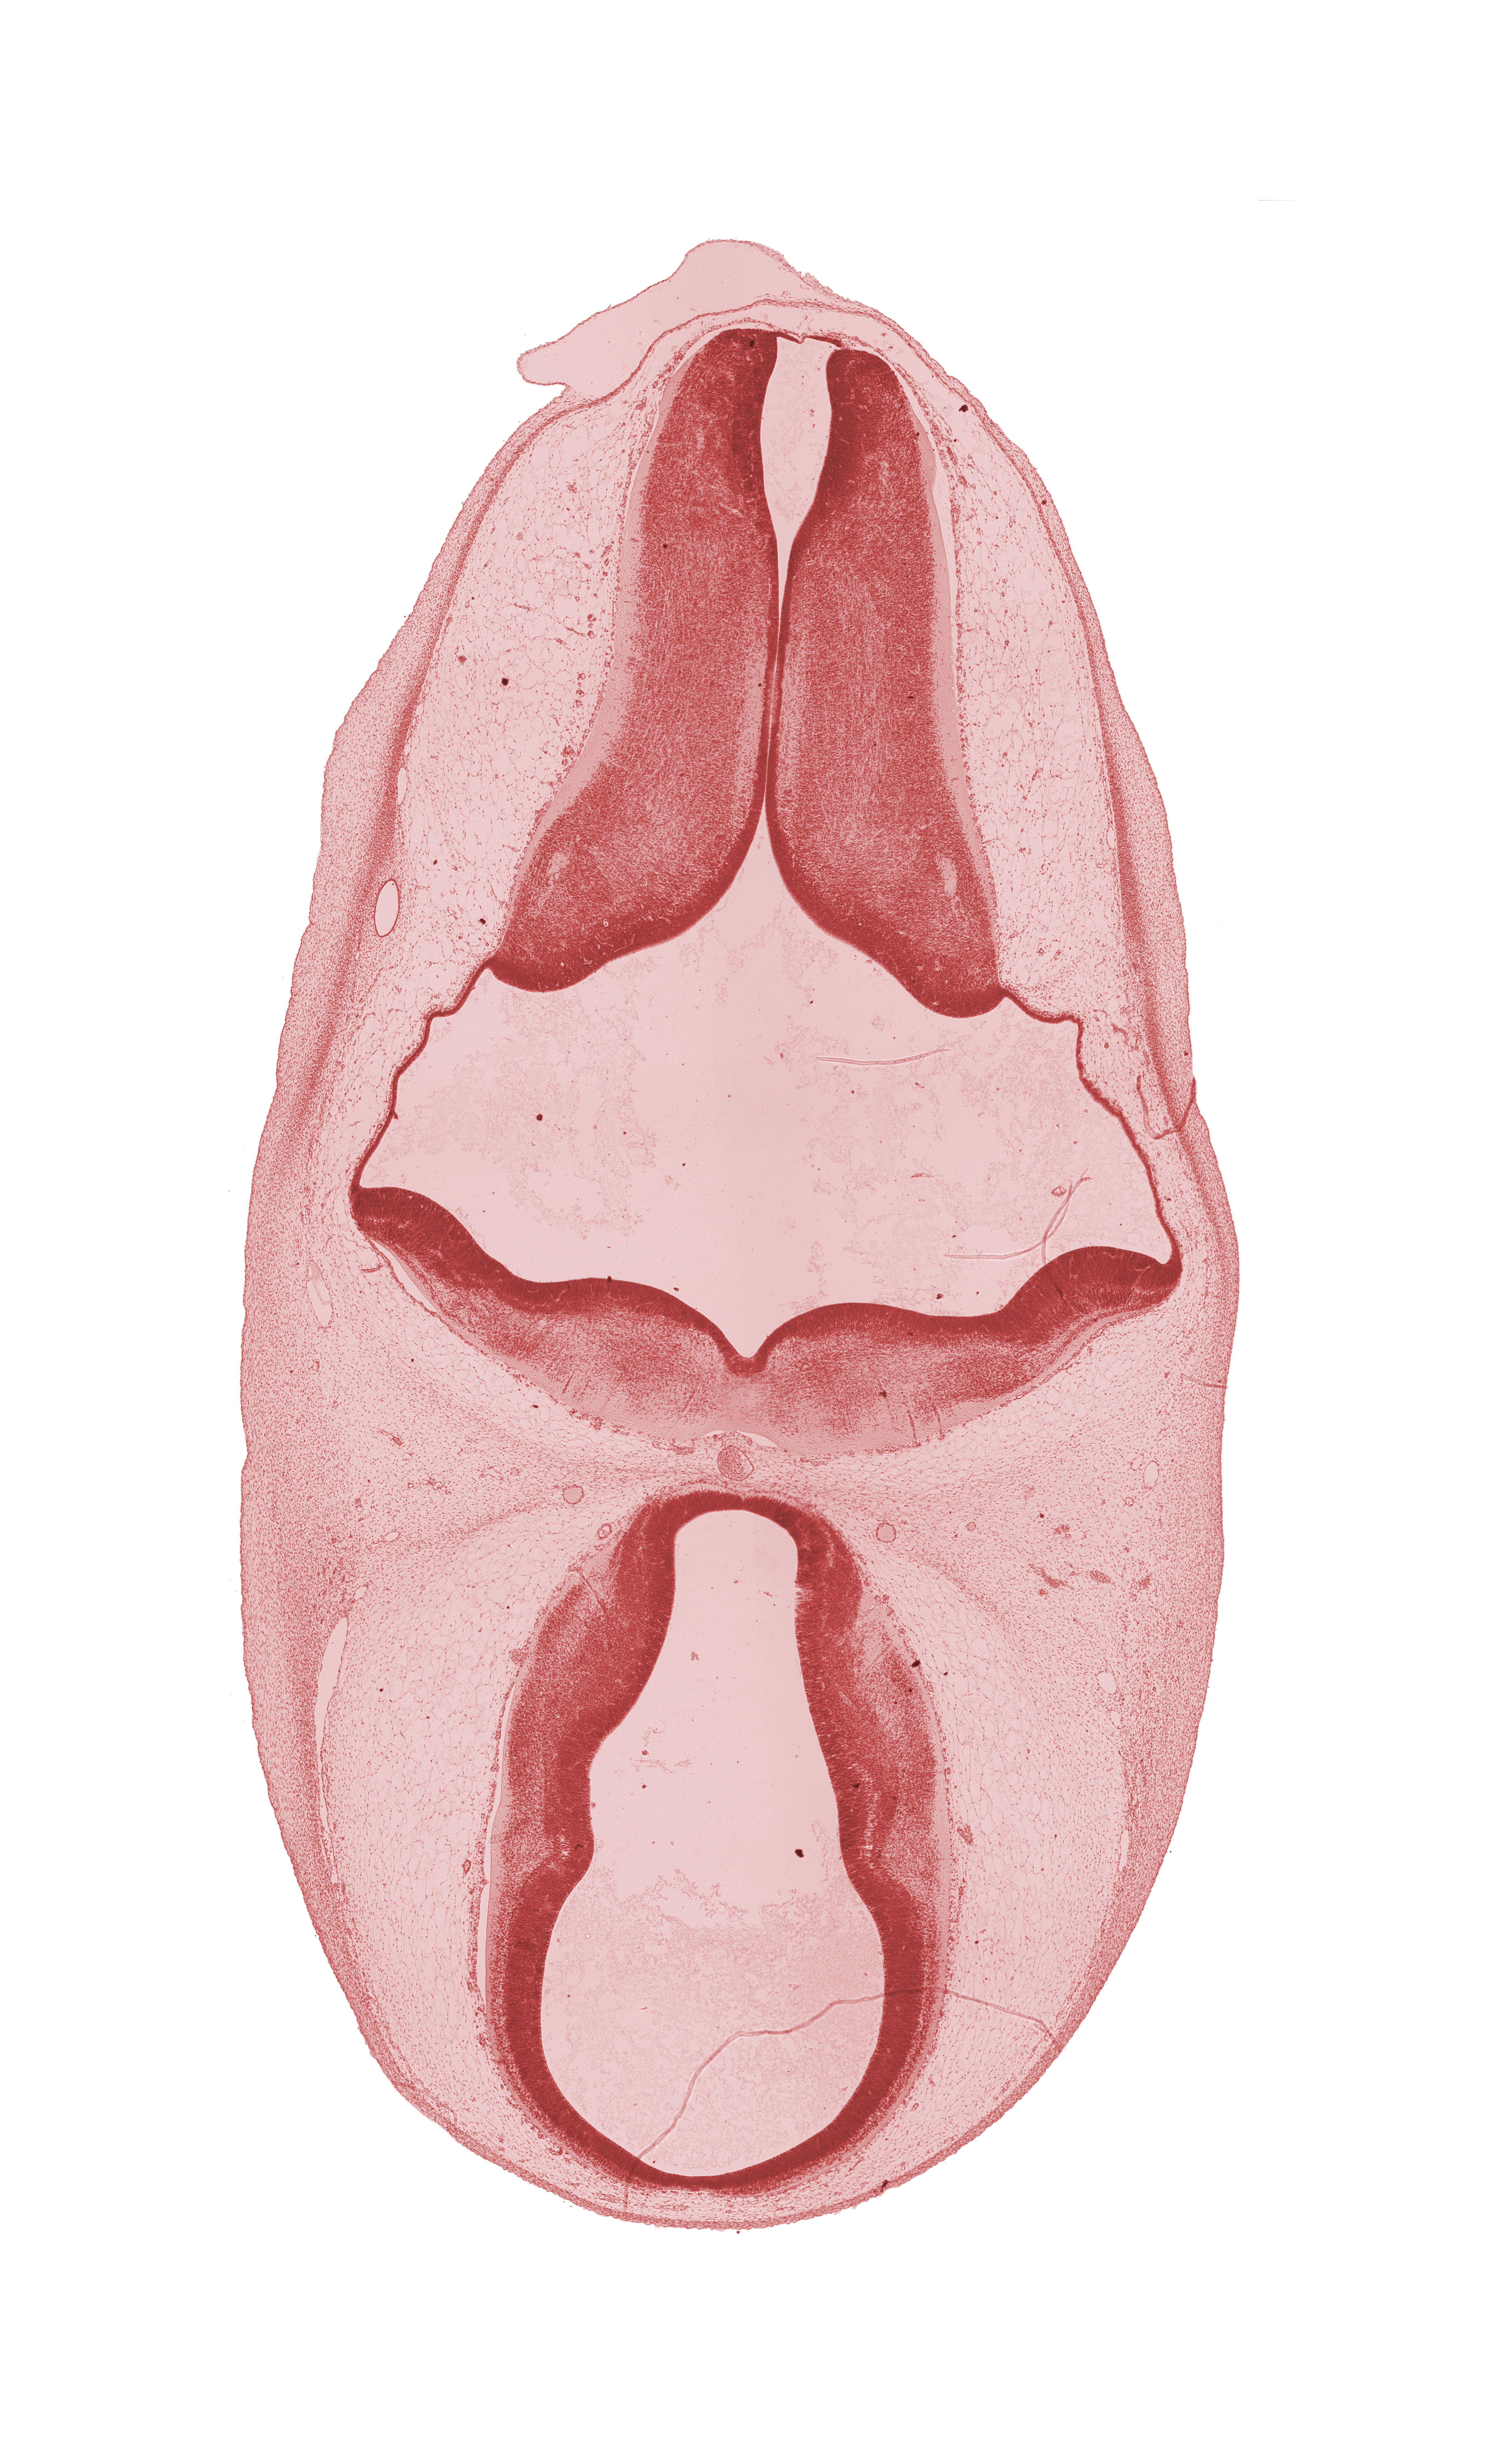 basilar artery, dorsal thalamus, edge of endolymphatic duct, hypothalamus, intermediate zone, marginal ridge, marginal zone, oculomotor nerve (CN III), osteogenic layer, trochlear nerve (CN IV), ventral thalamus, ventricular zone